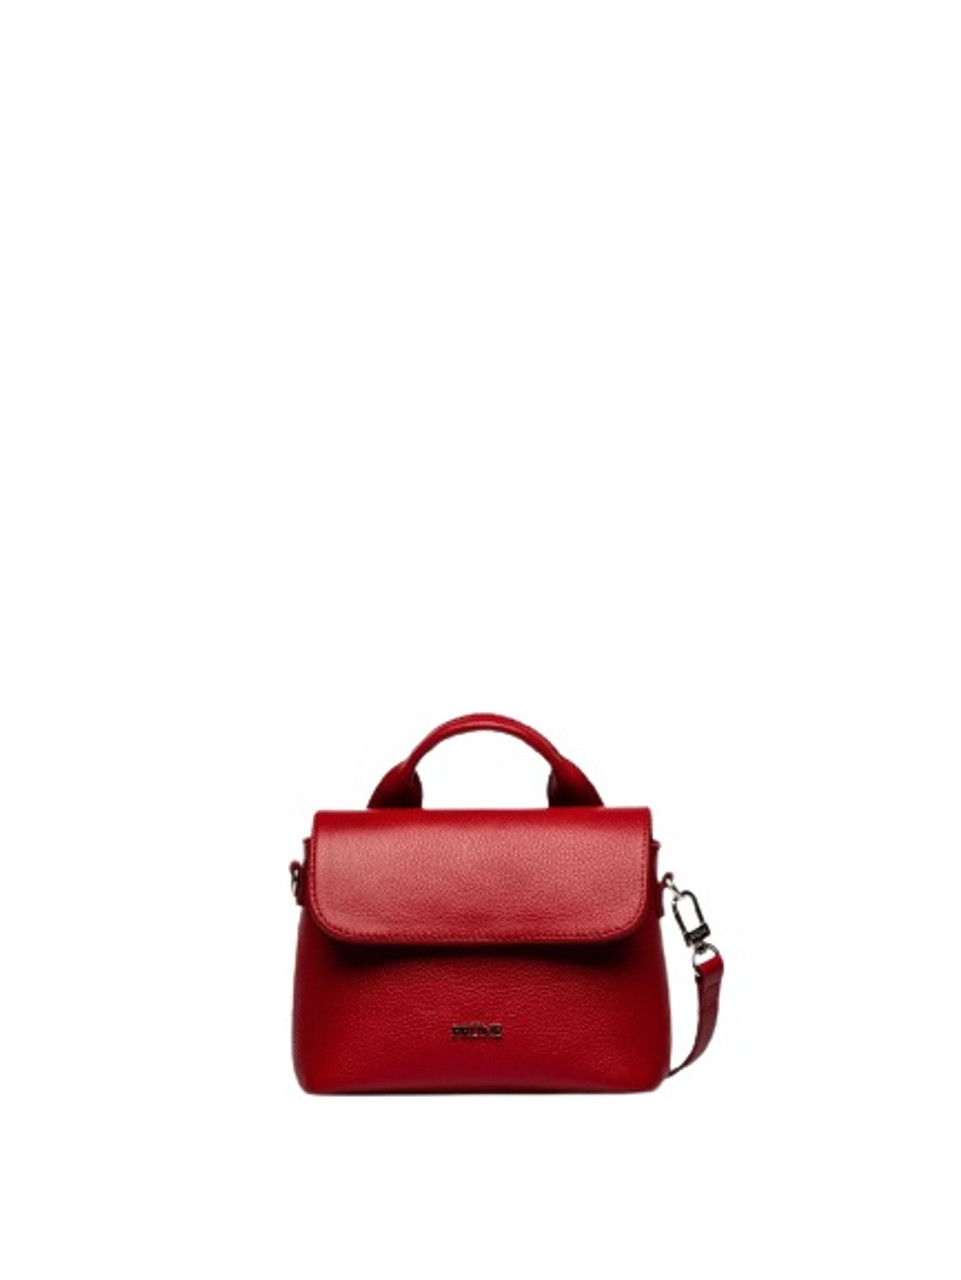 Prüne Bandolera Miss Daisy Graneado Rojo Leather Bag Internal Pocket Adjustable Handle Straps (Red) - Direct